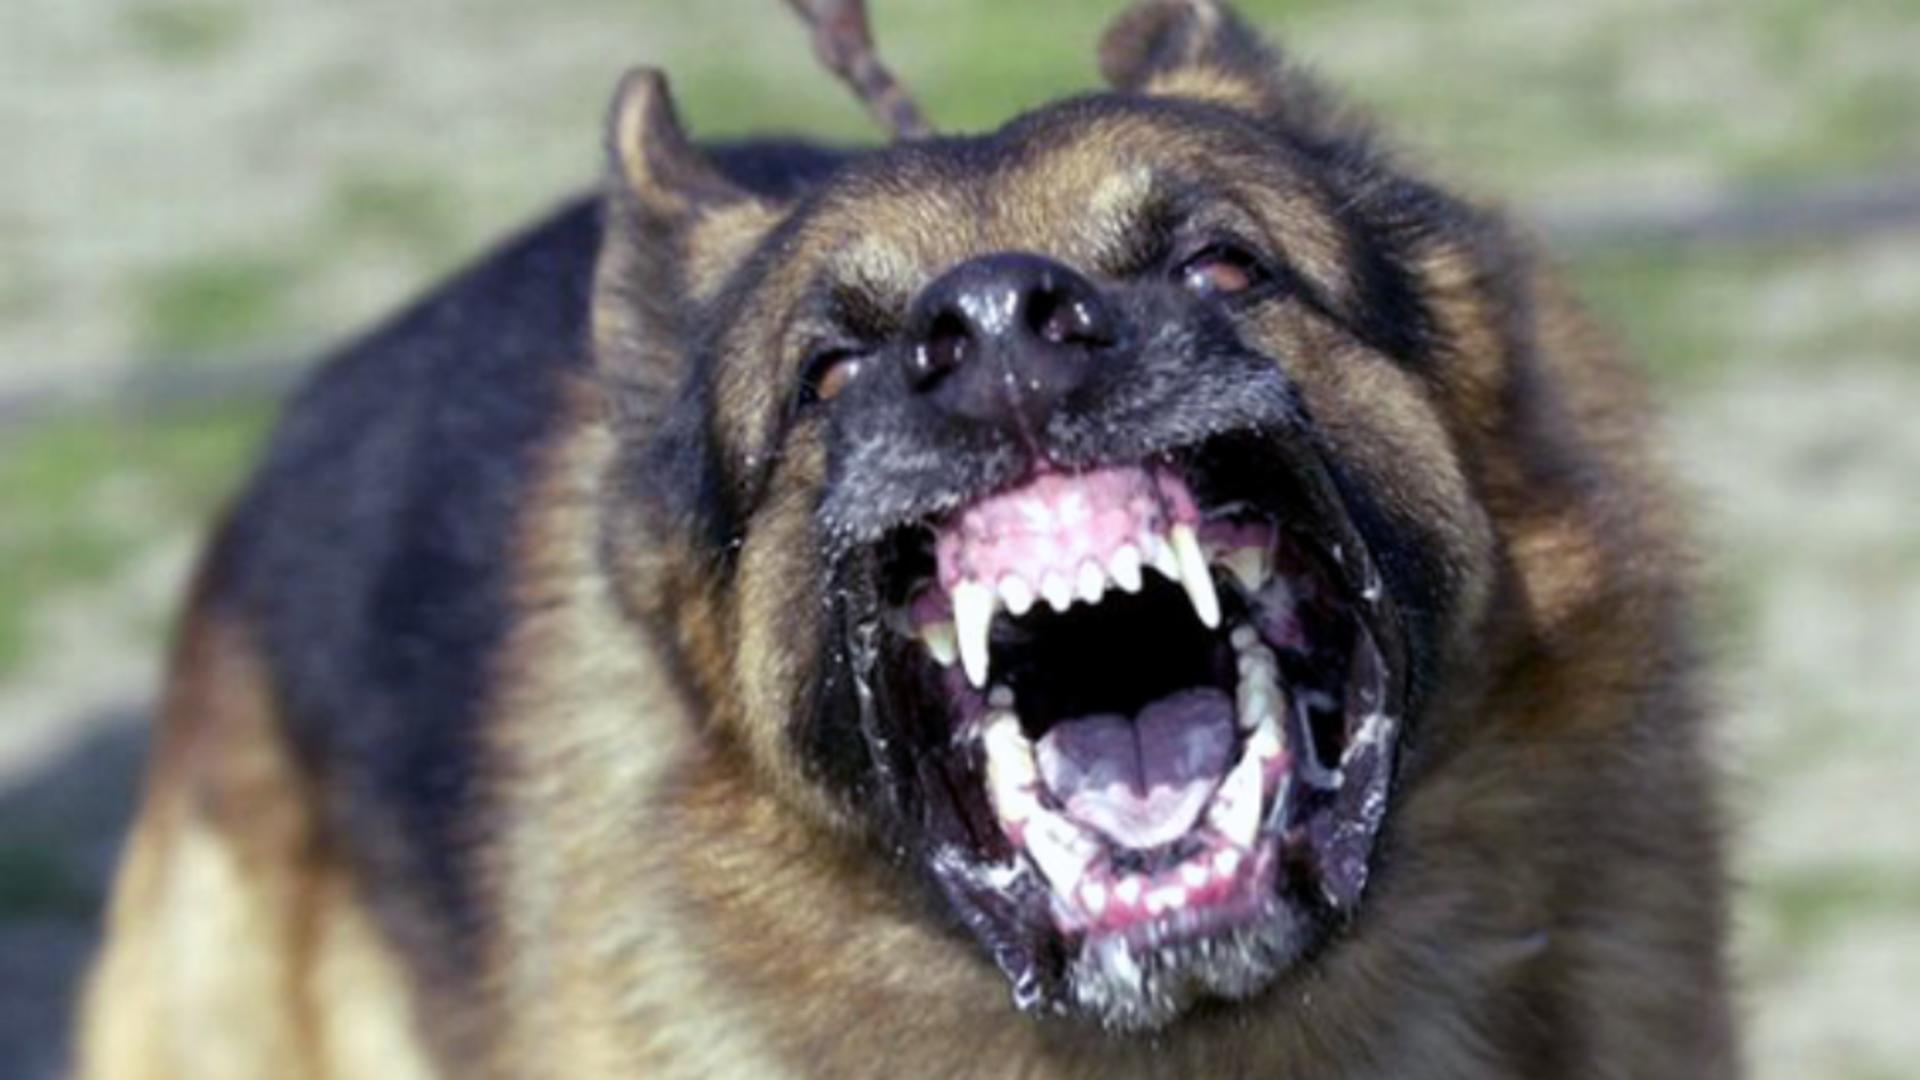 Câine agresiv - imagine de arhivă